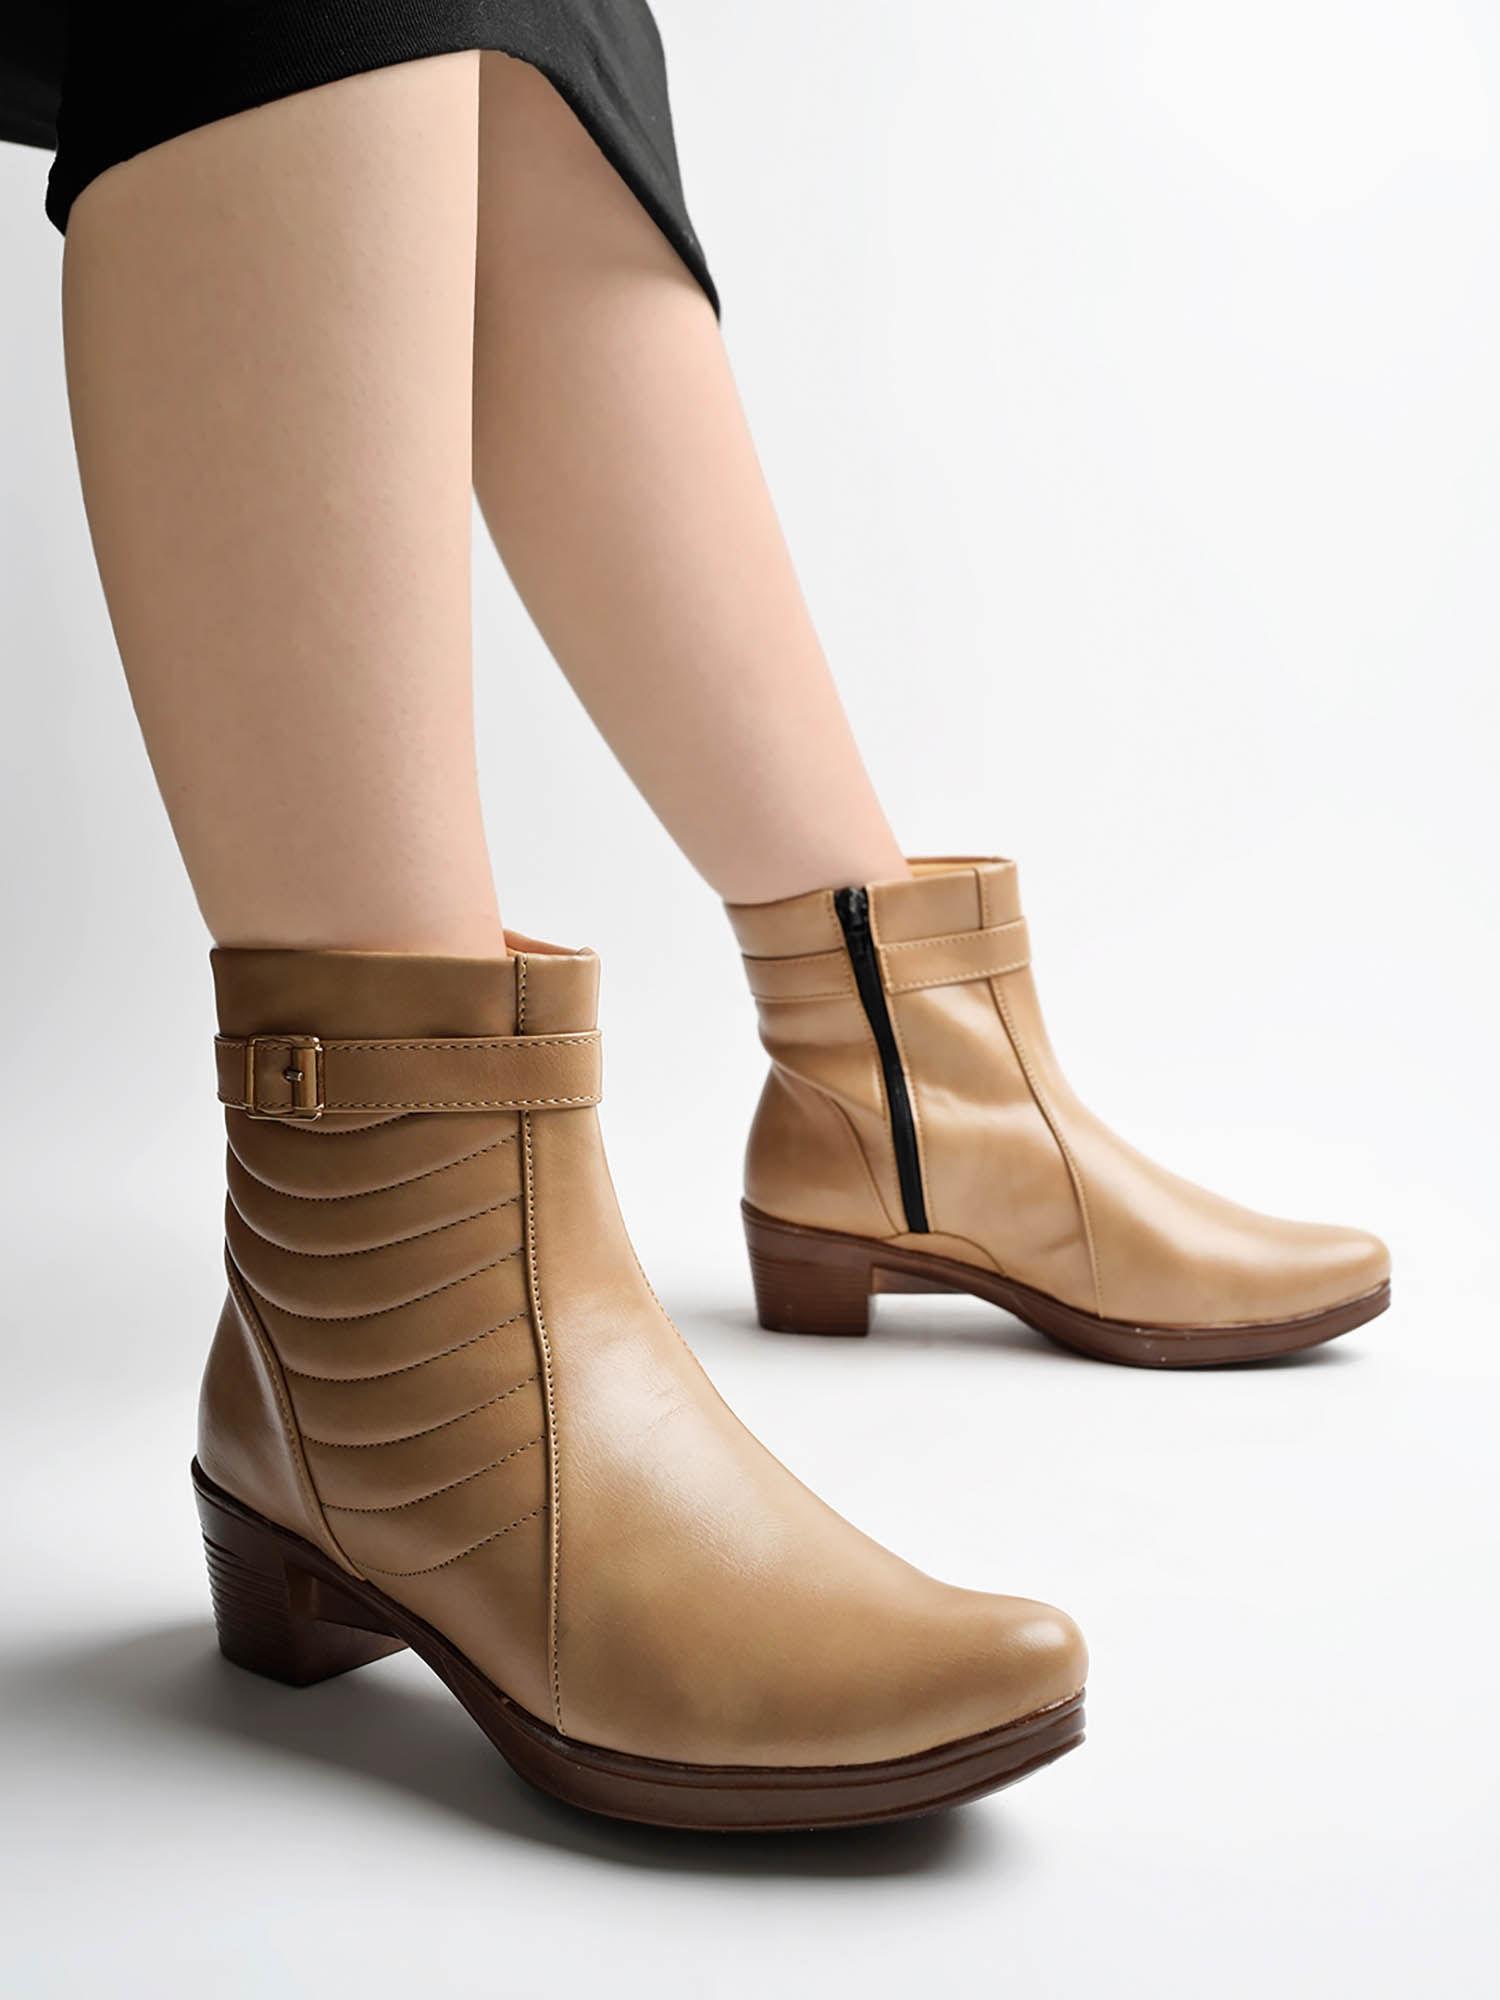 stylish cream boots for women